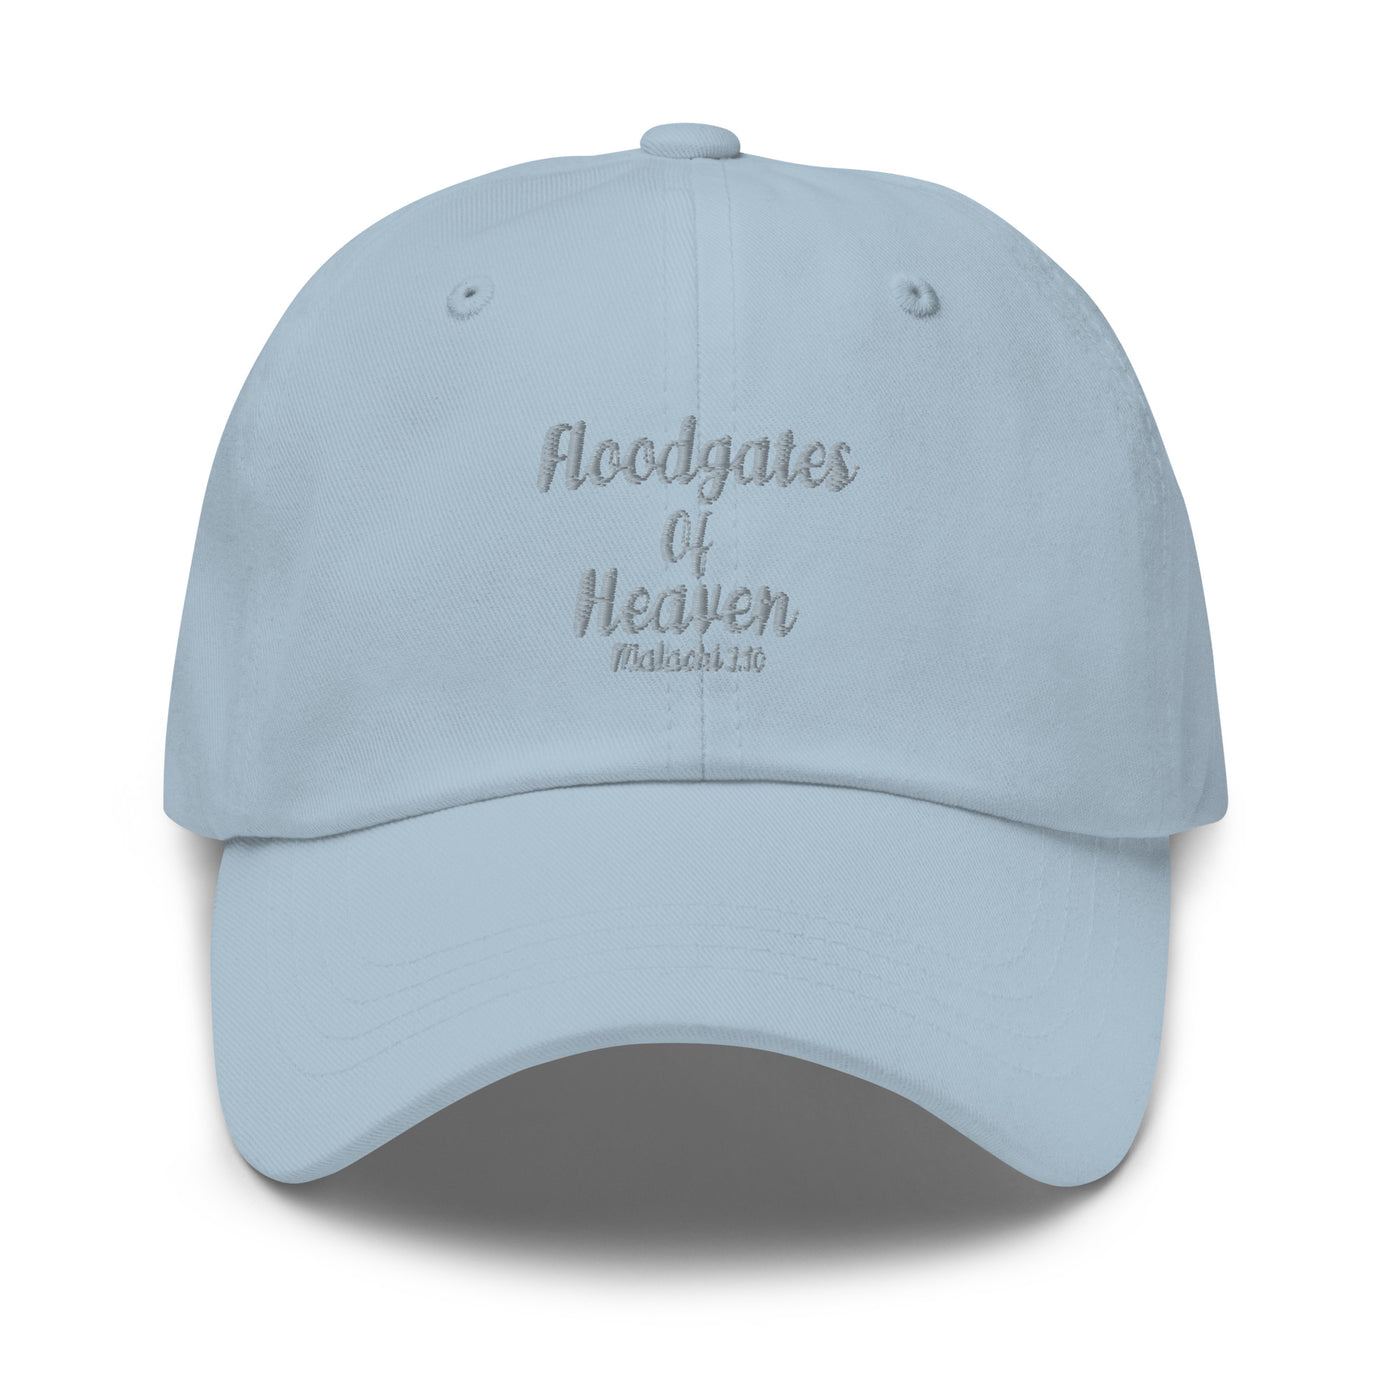 F&H Christian Floodgates of Heaven Malachi 3:10 baseball hat